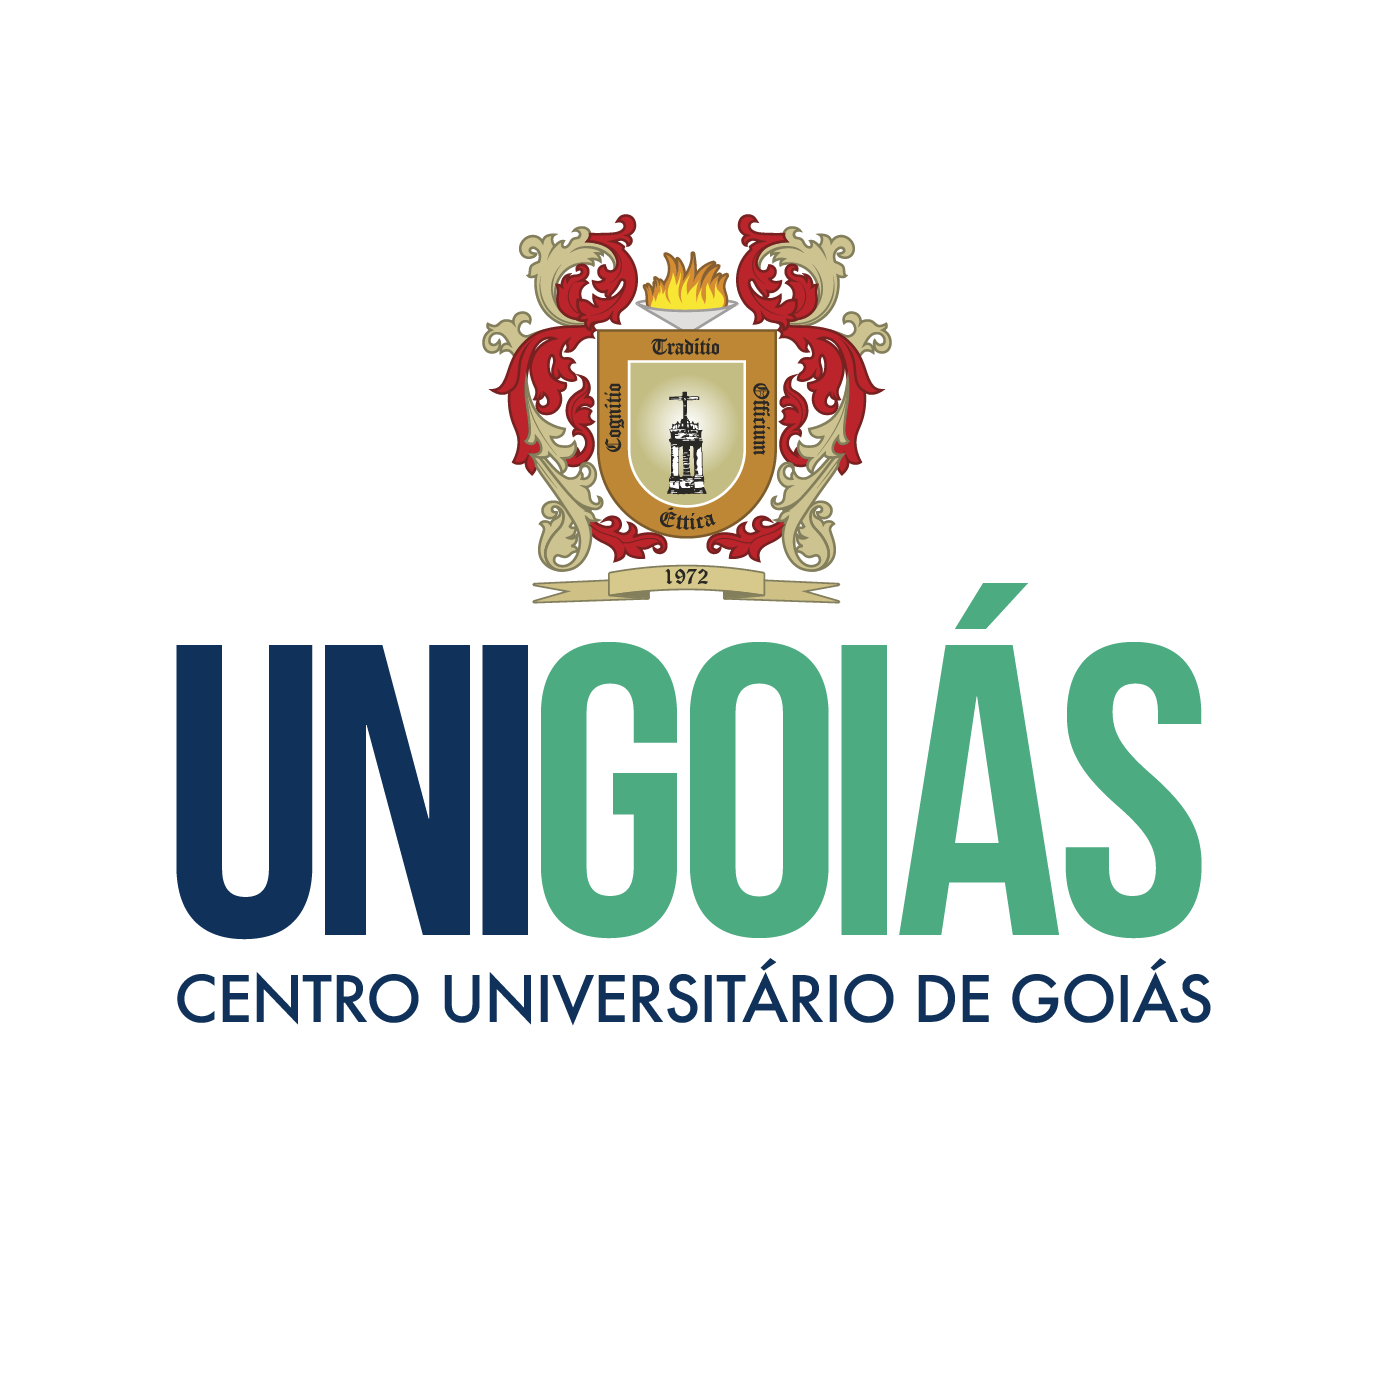 University Center of Goiás - UNIGOIÁS logo